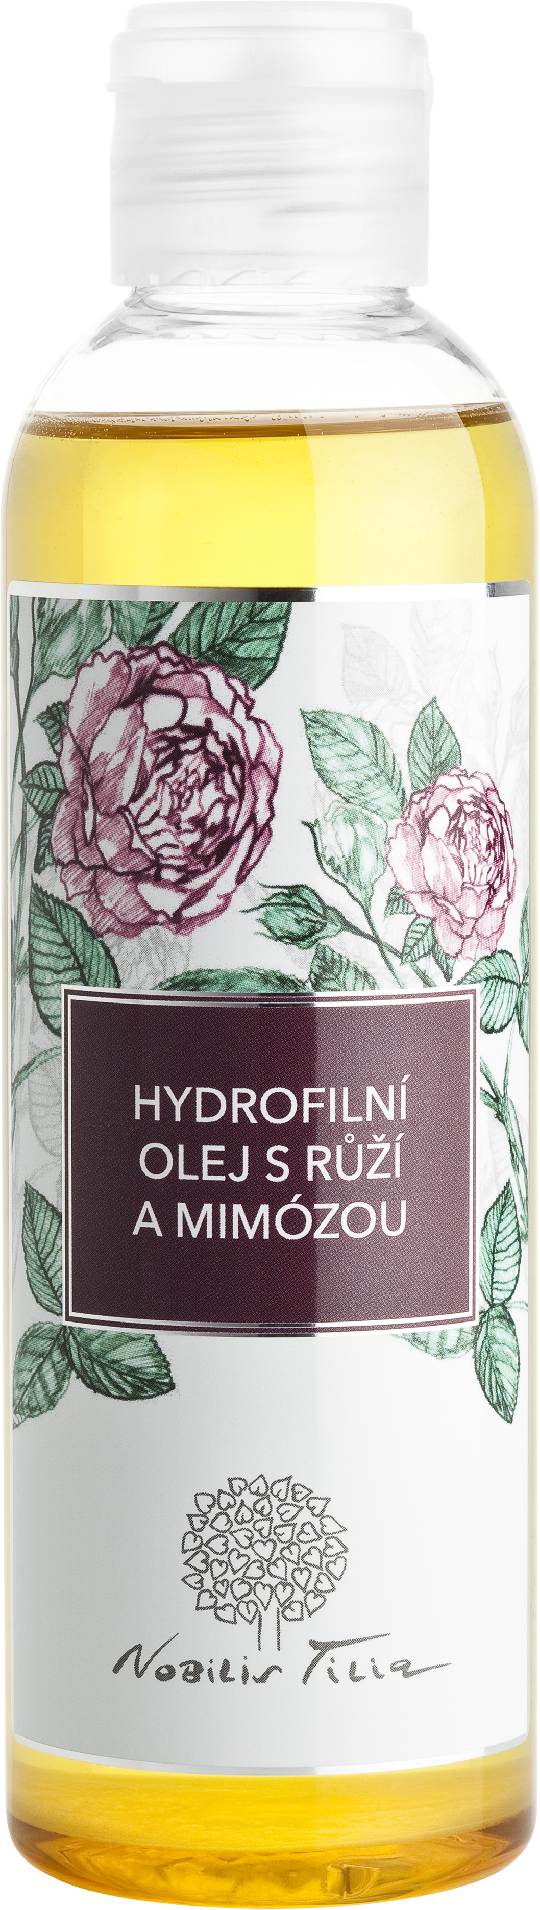 Hydrofilní olej s Růží a mimózou: 200 ml